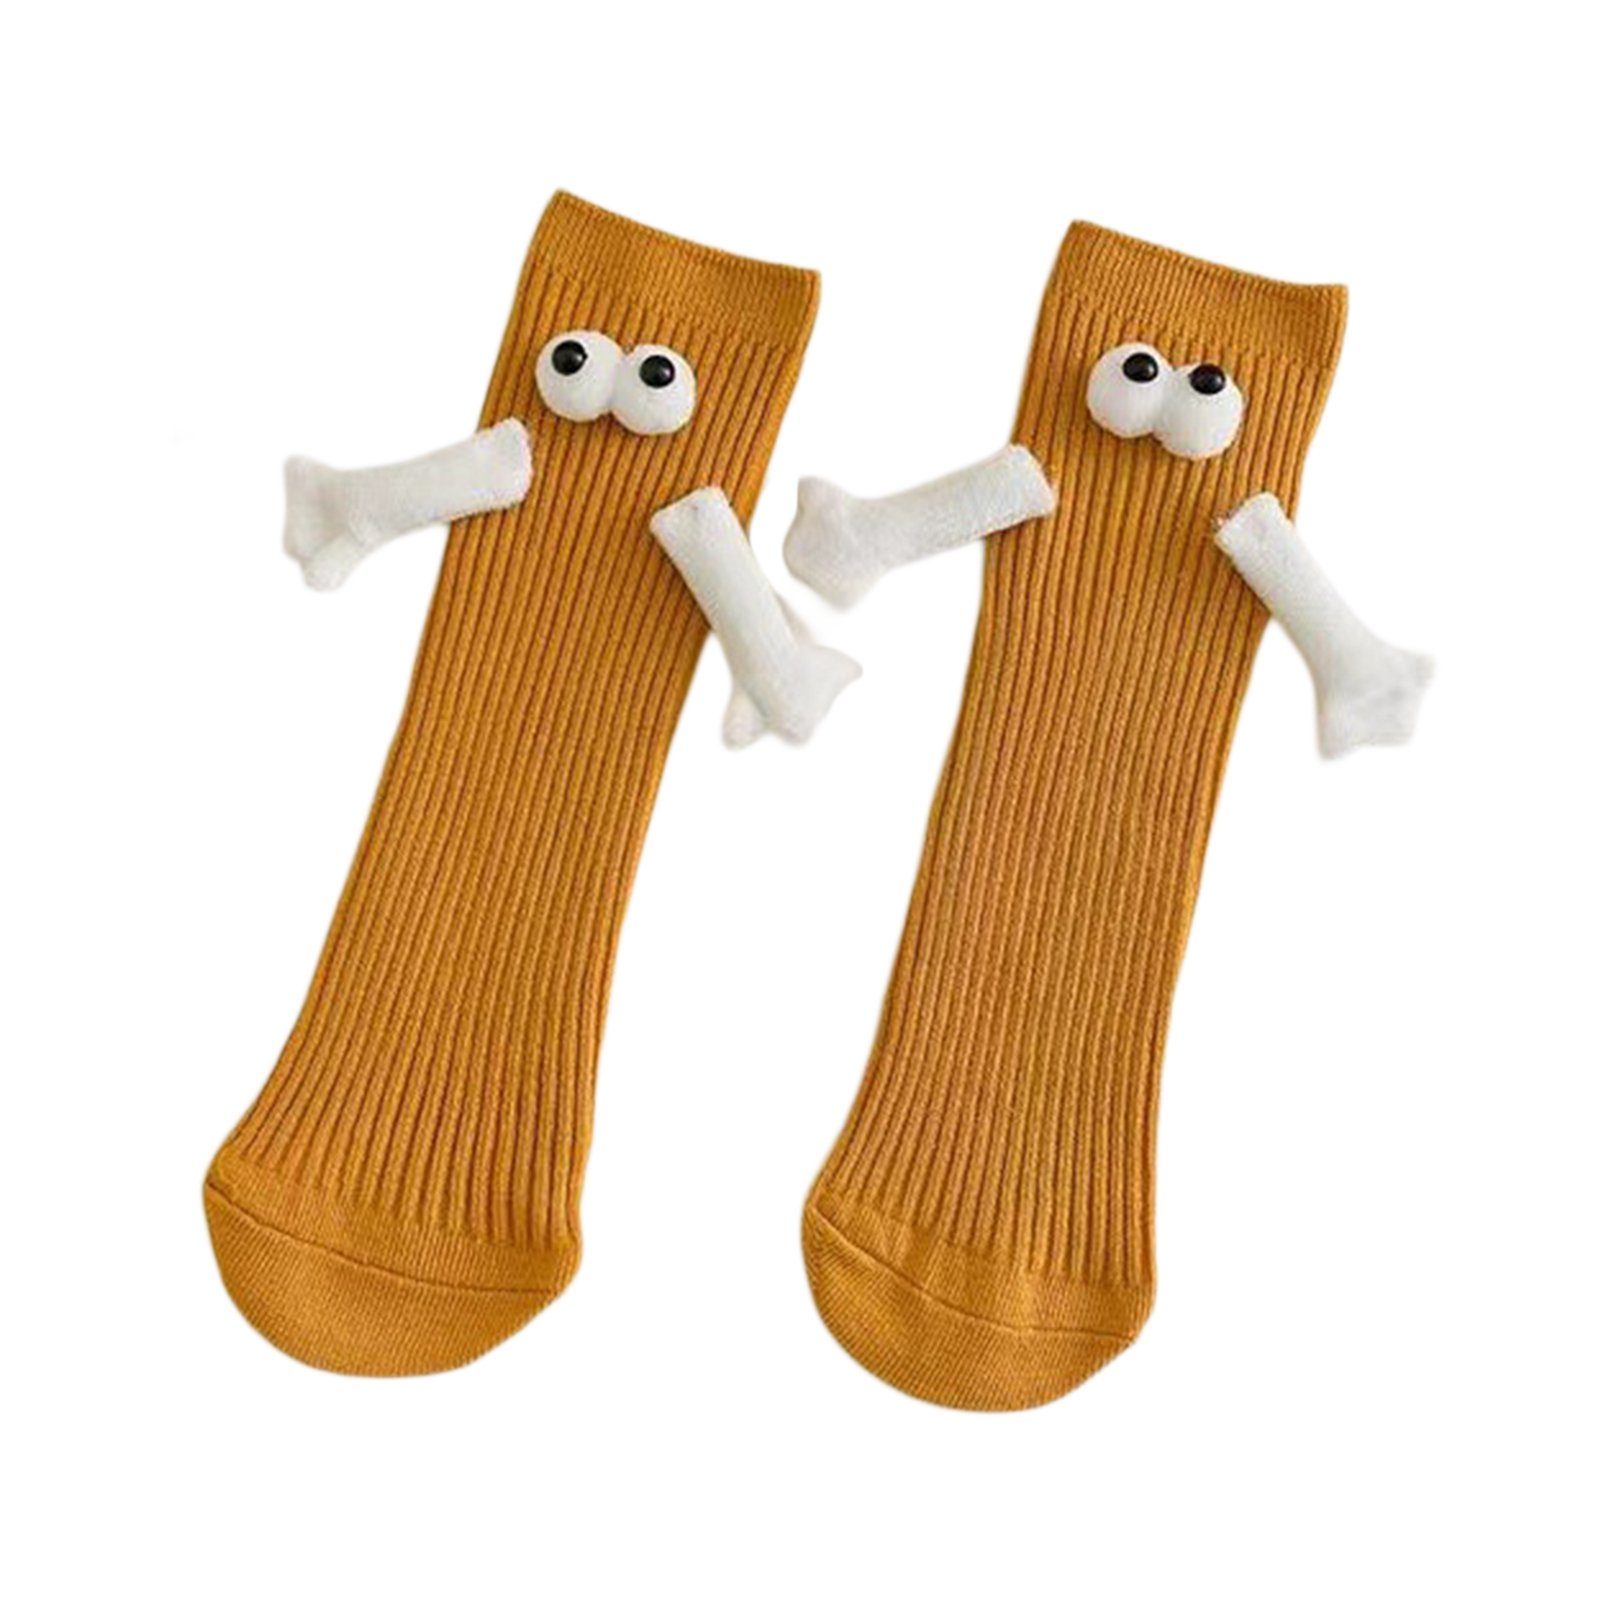 Trend-Persönlichkeit) Saug-3D-Puppenaugen-Socke Socken Unisex, (Magnetische Die Magneten, Paar für Händchen 2 und Paar-Händchenhalten-Socken, Gelb Lustige Socken Halten Mit Rutaqian Feinsocken